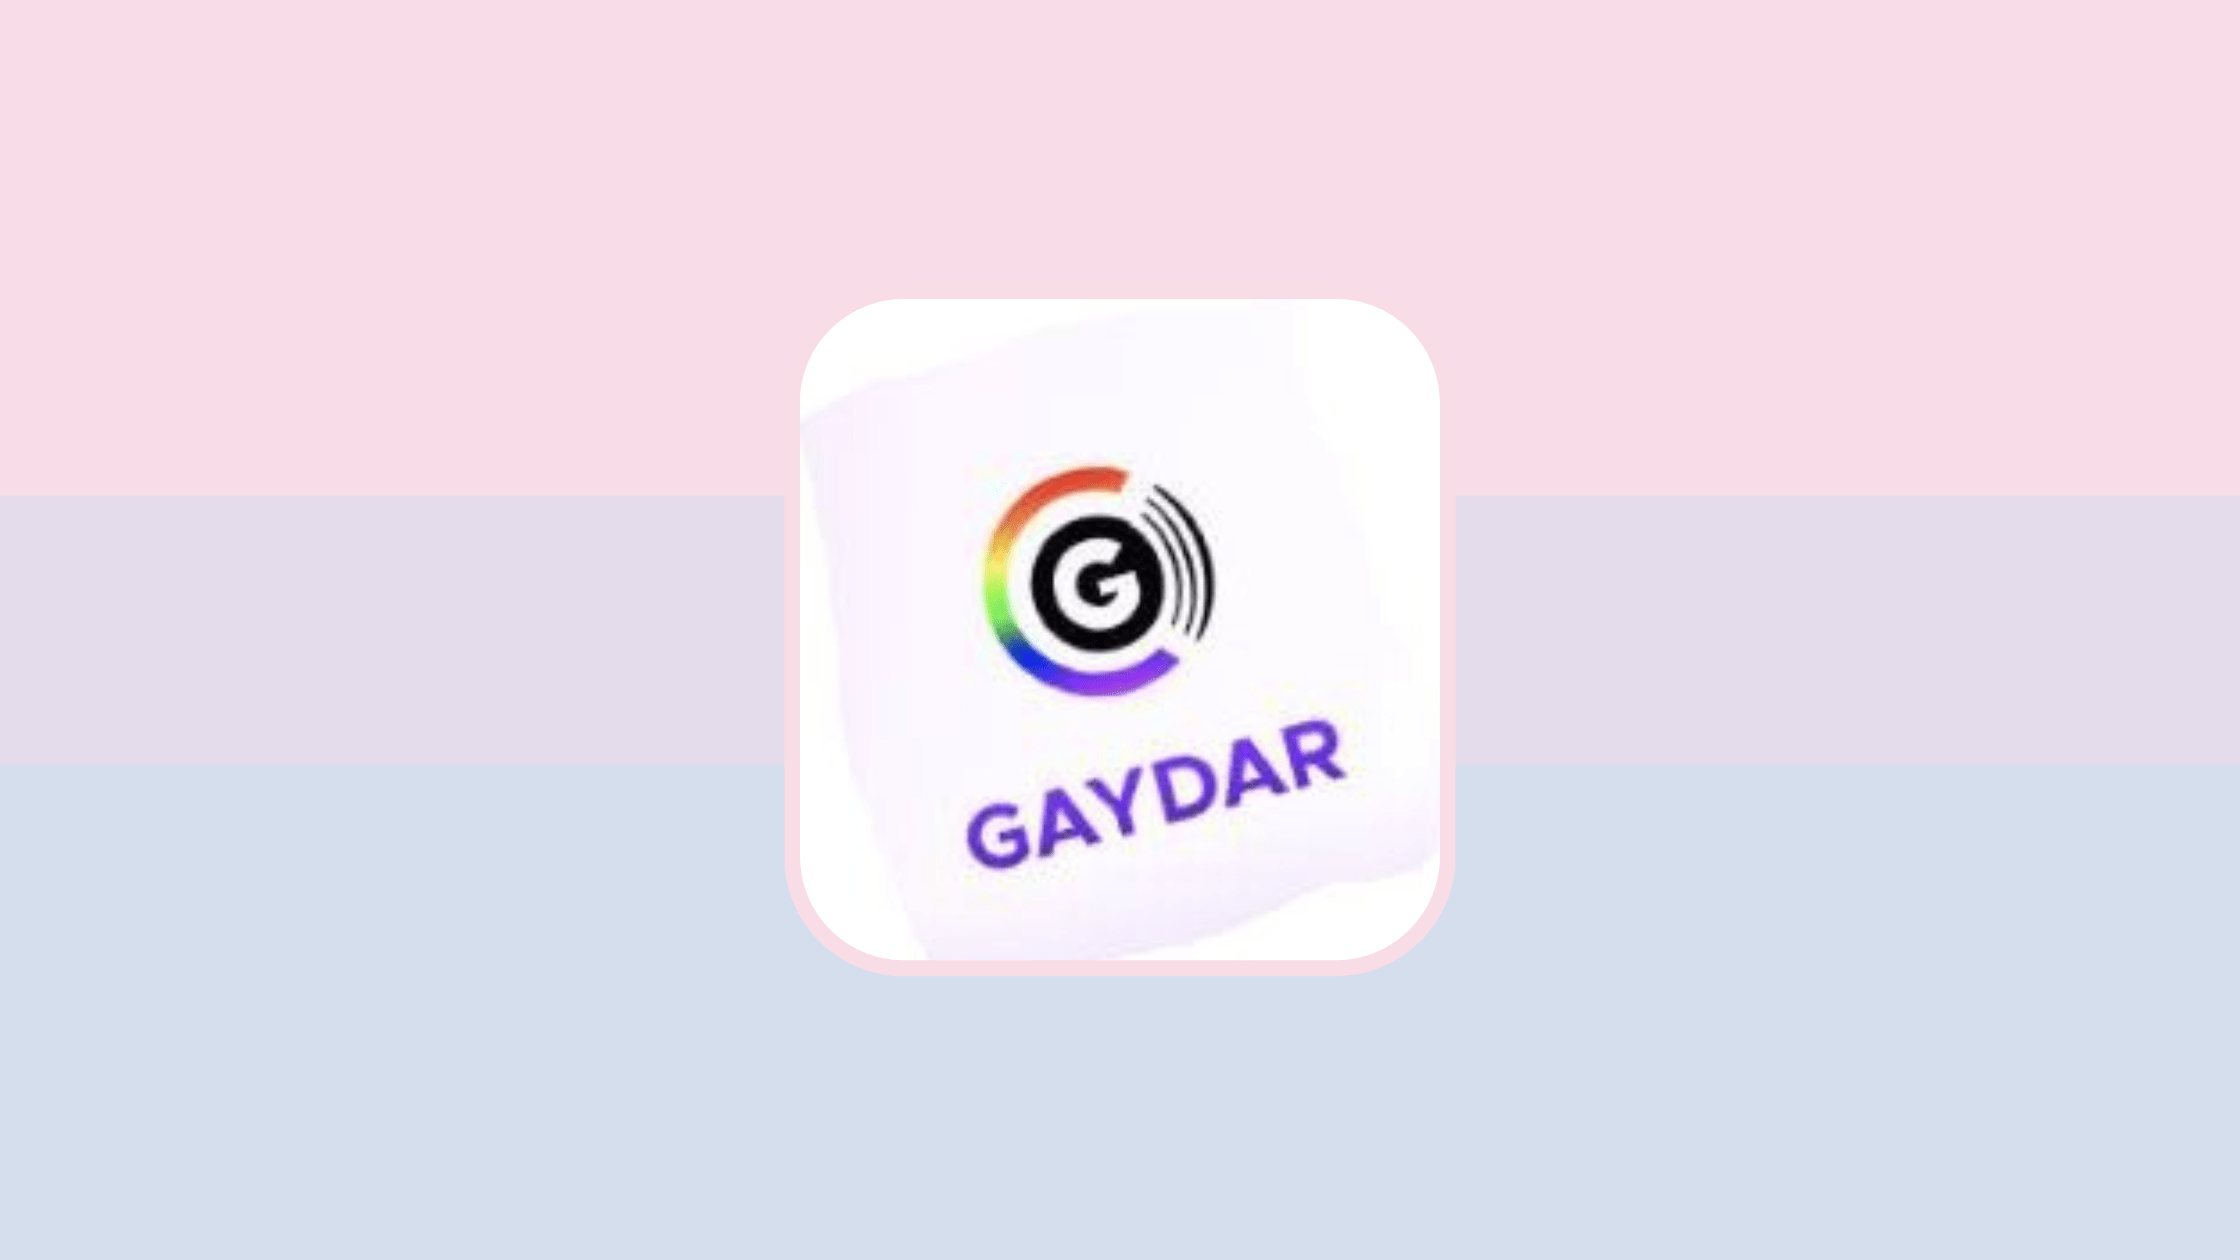 Gaydar